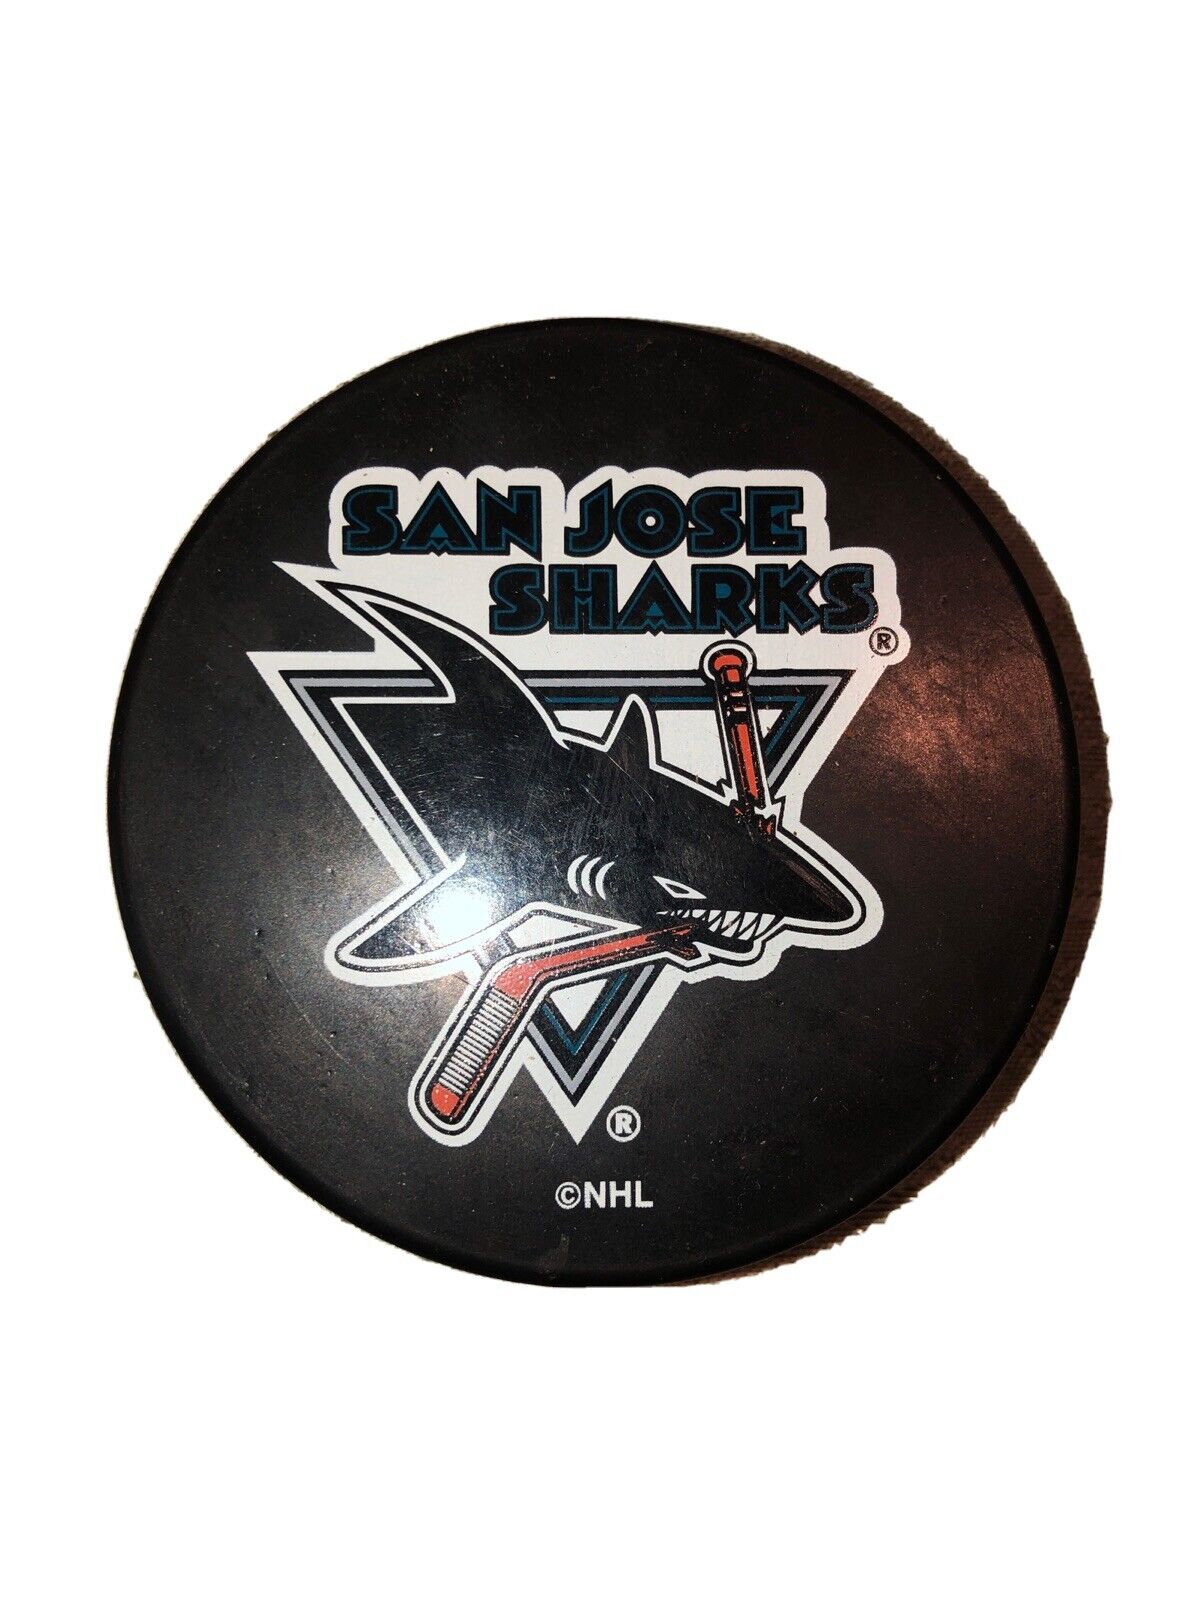 San Jose Sharks NHL Official Hockey by Inglasco - Puck Vintage 1990s 送料込 贈物